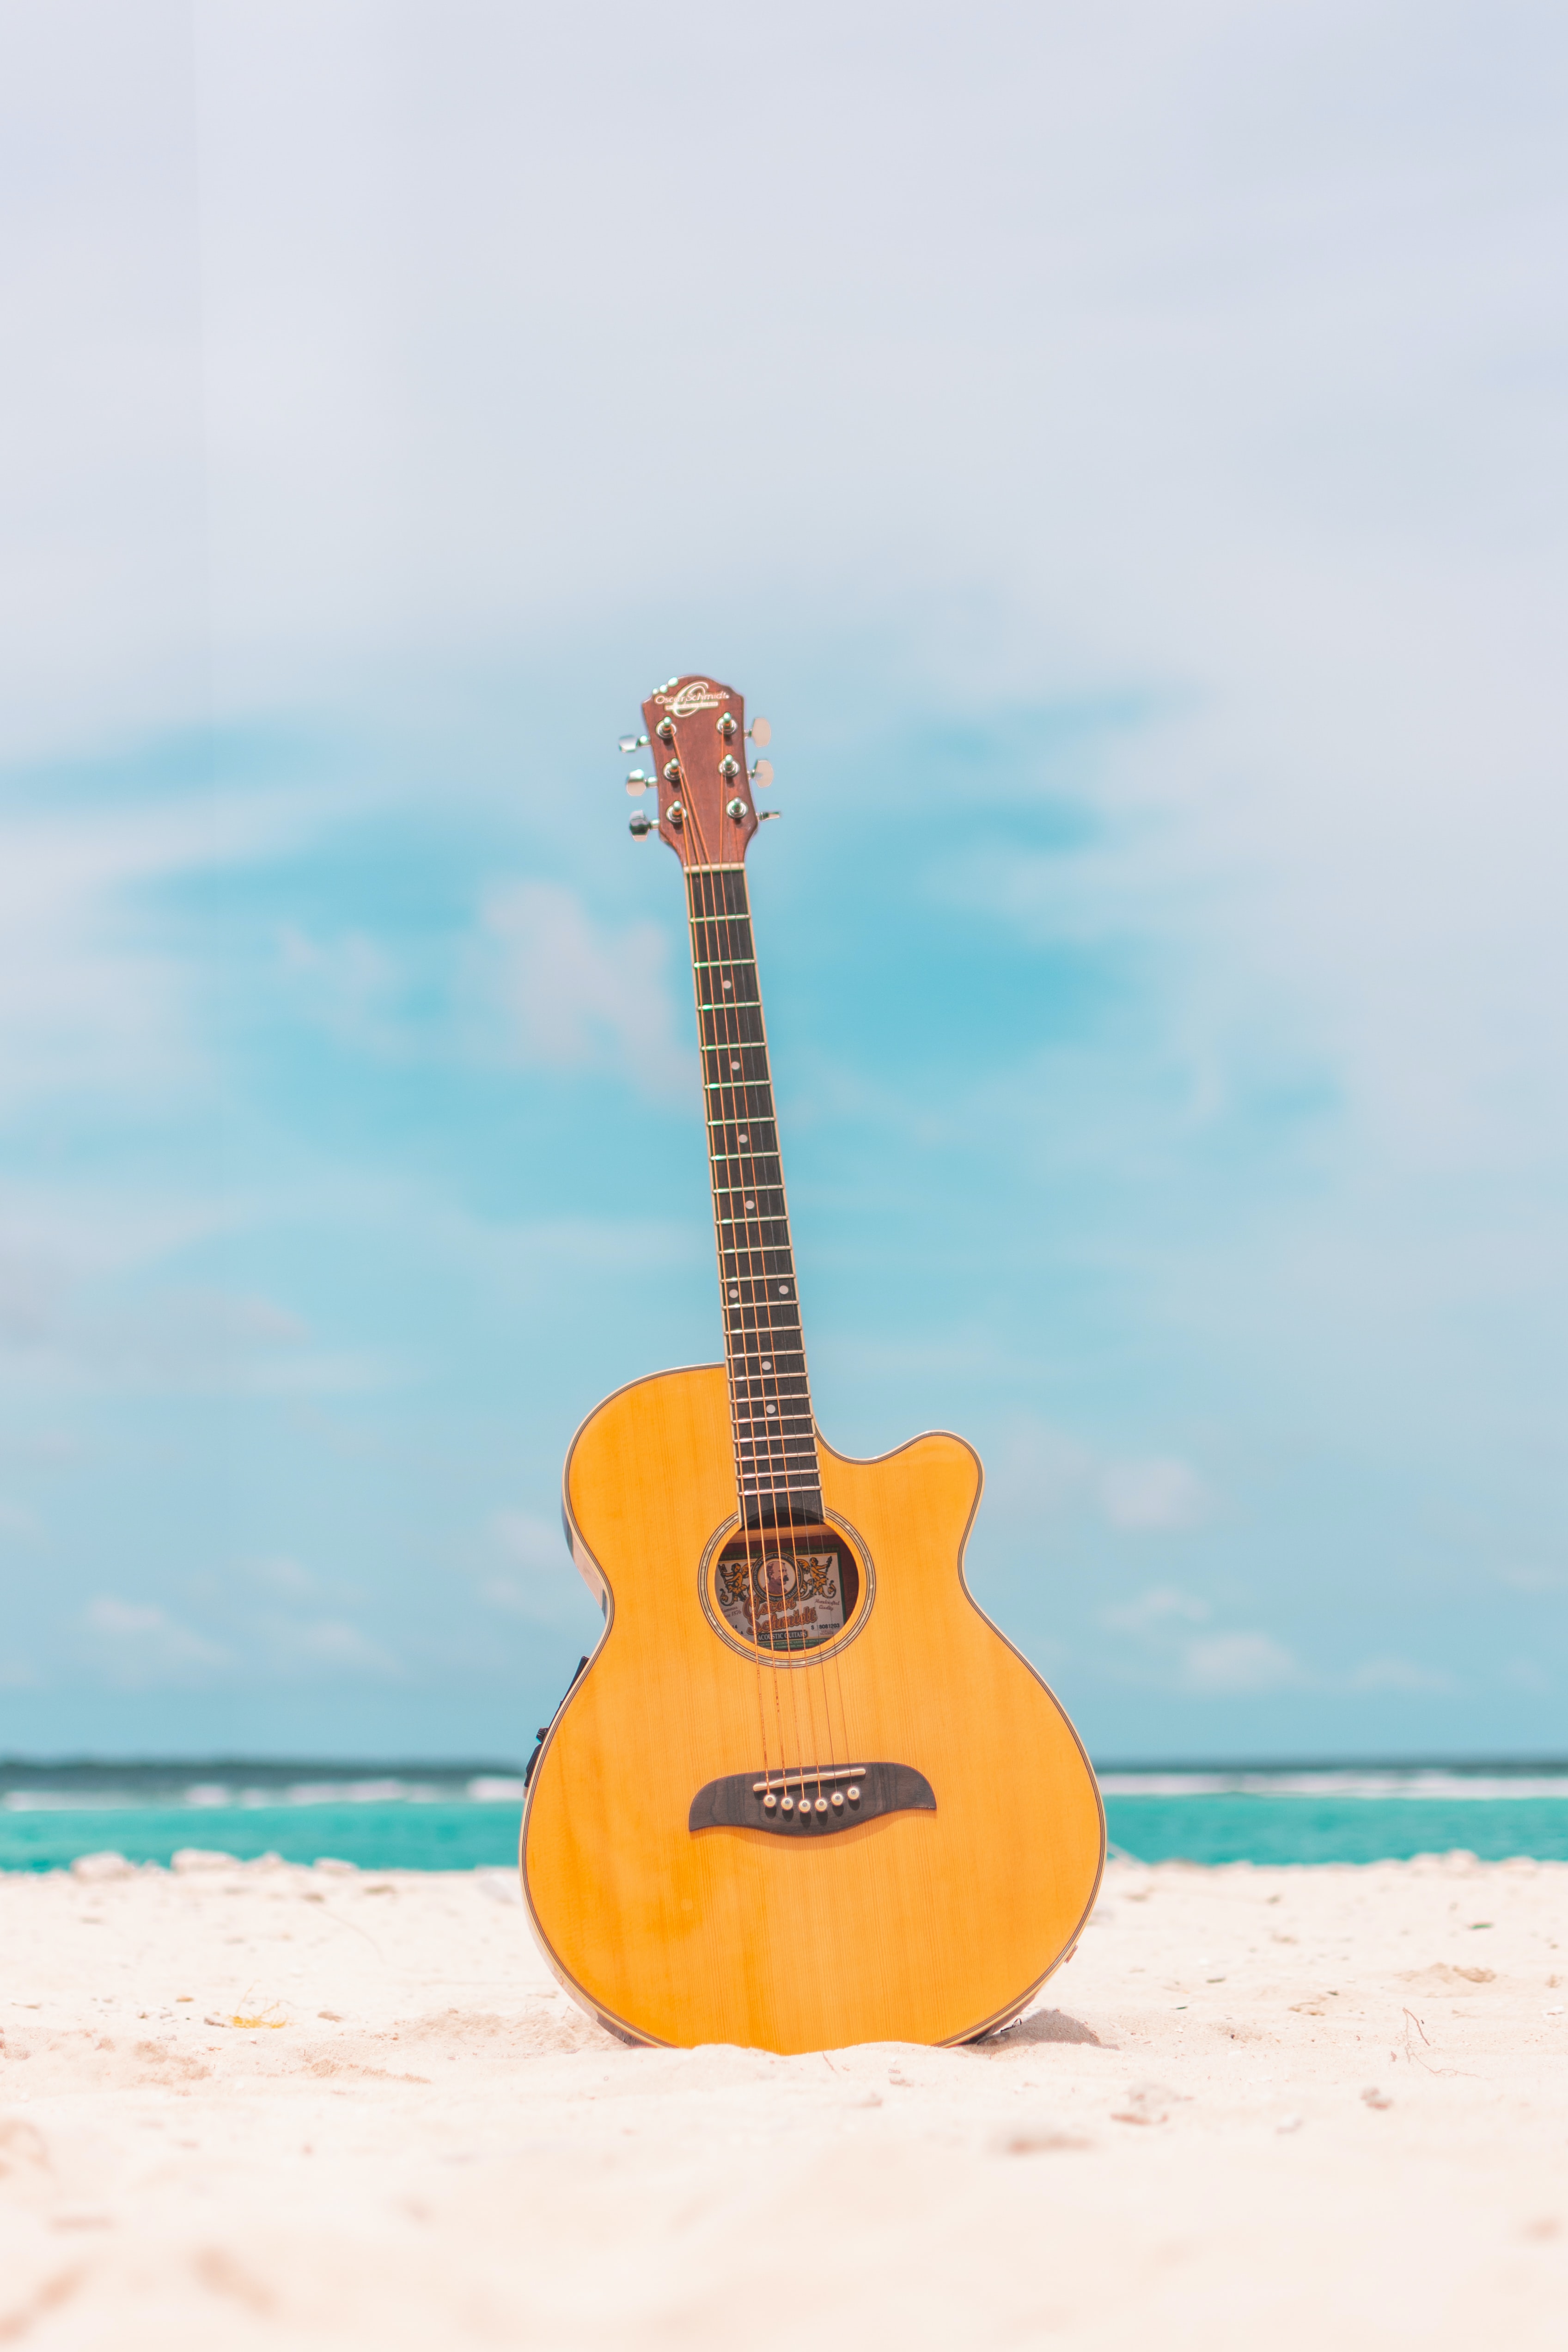 wallpapers guitar, acoustic guitar, beach, music, summer, tool